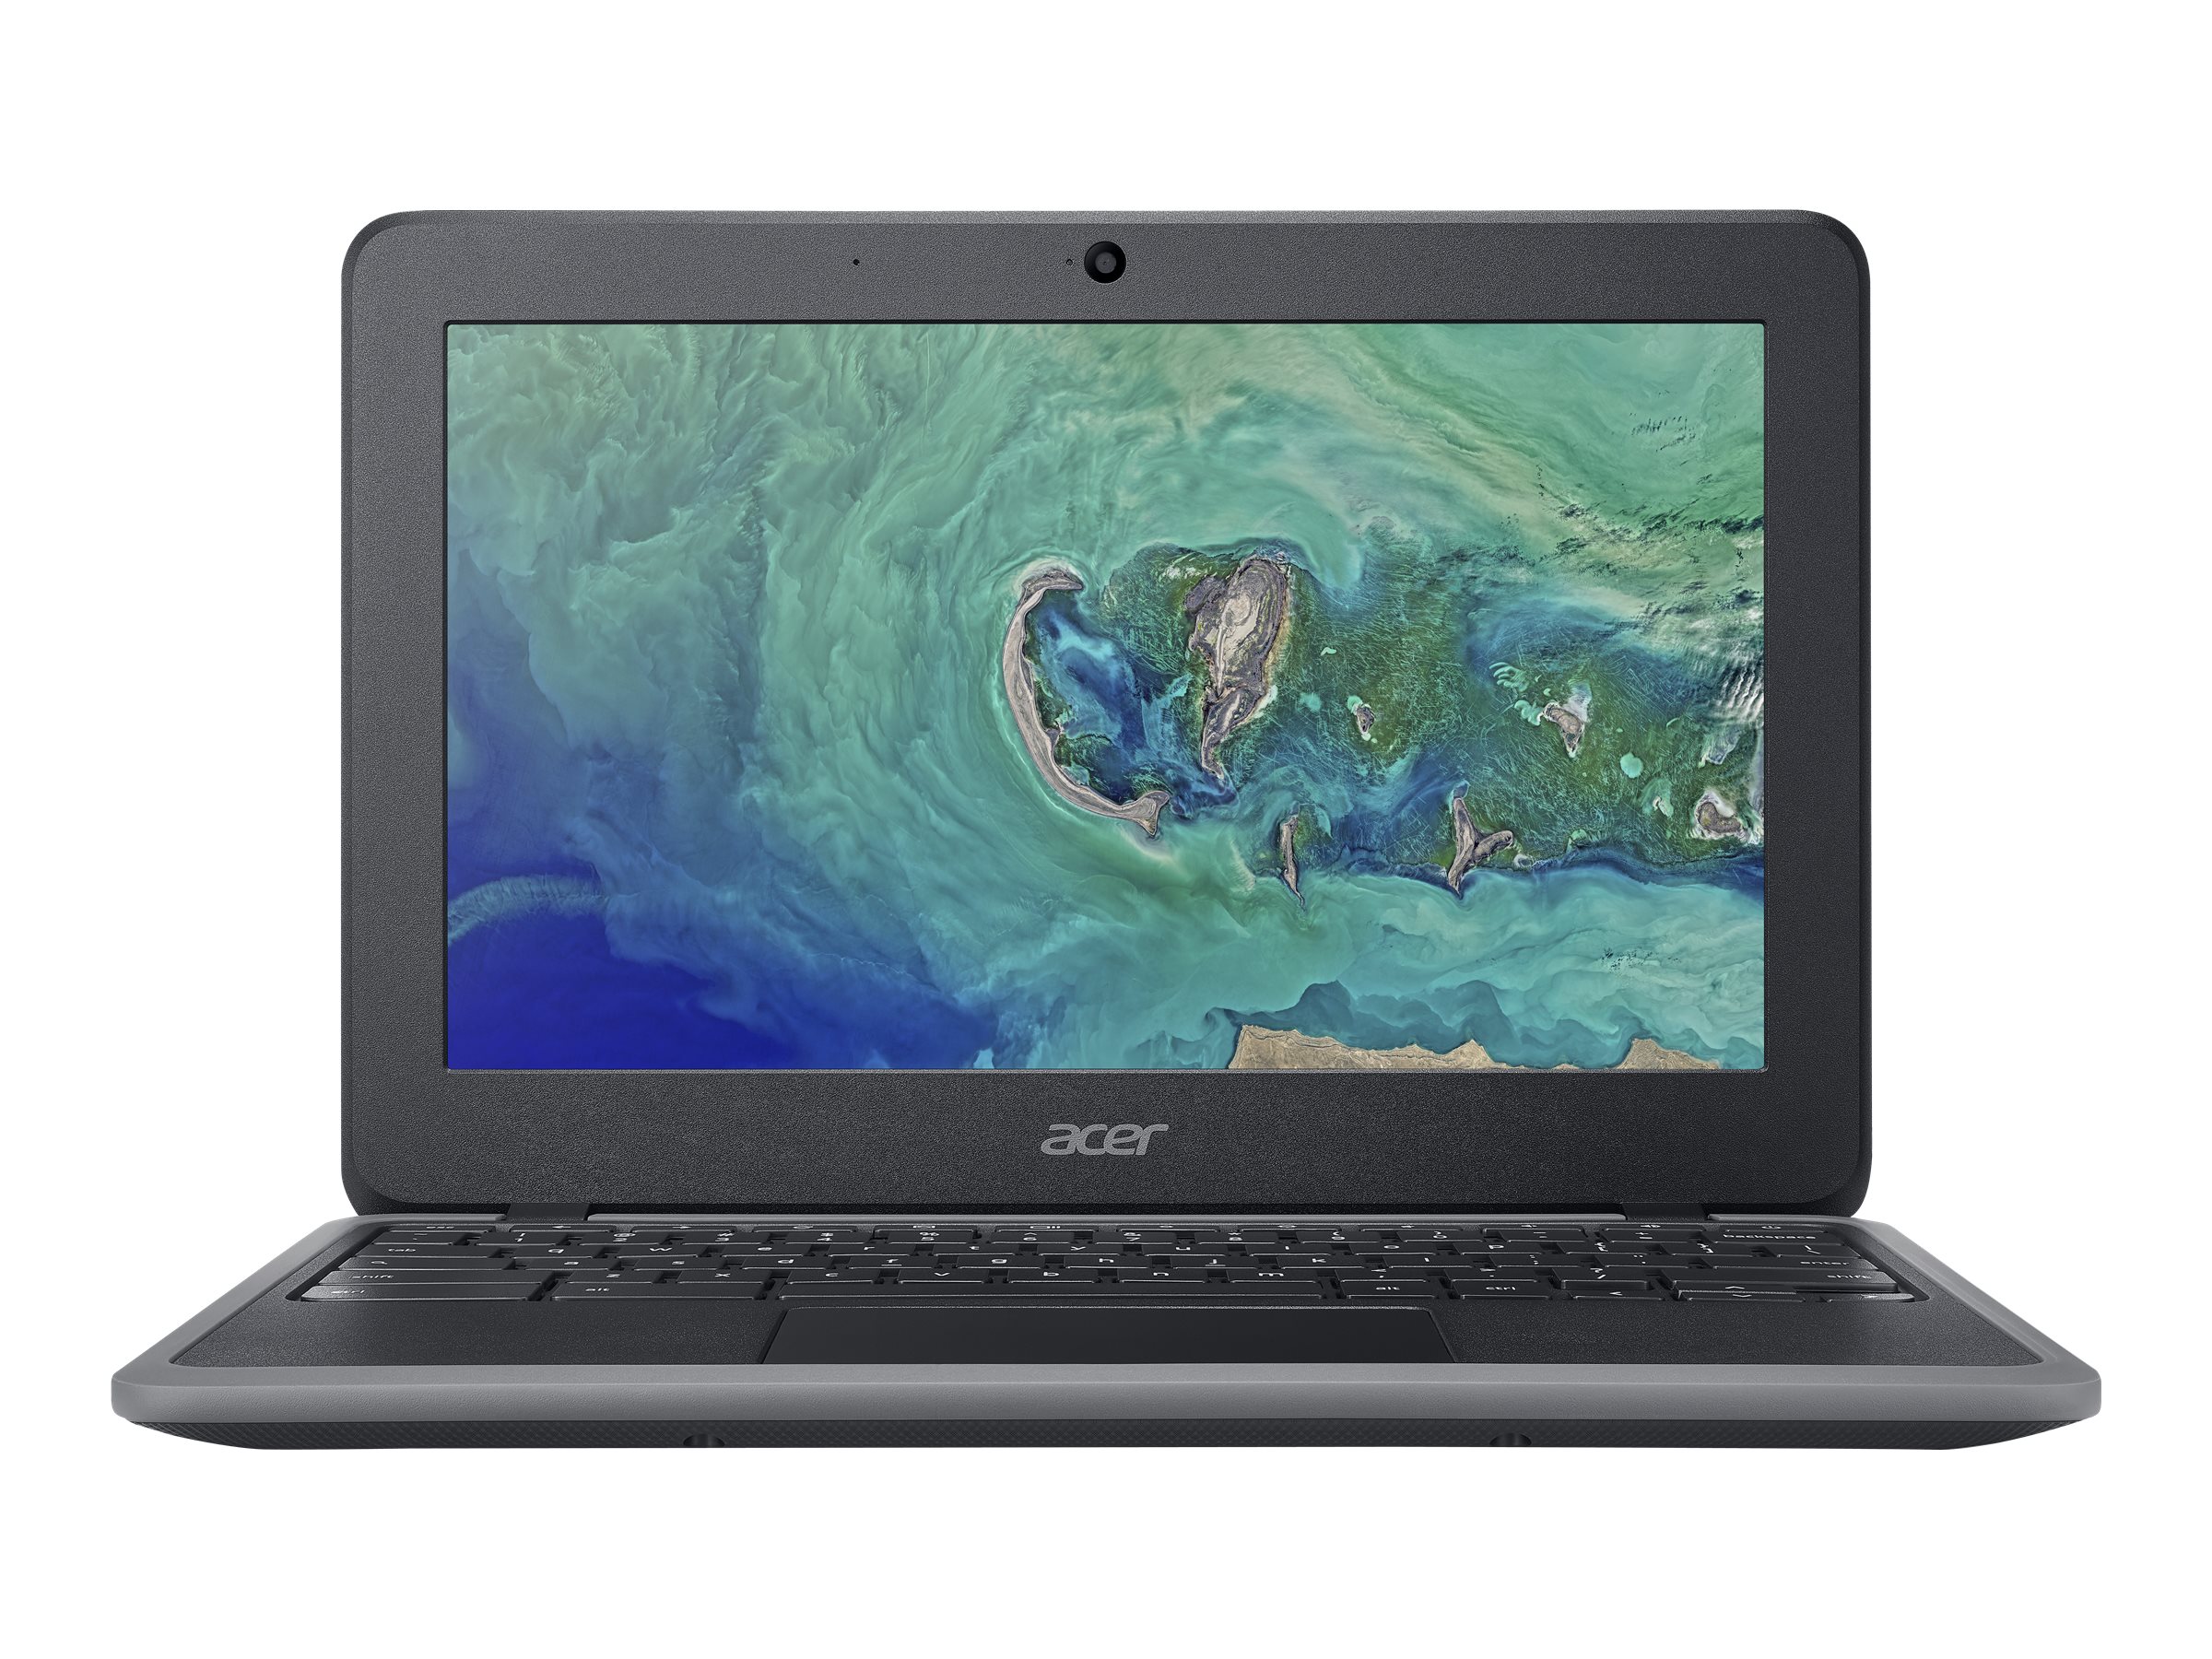 Acer Chromebook 11 (C732T)